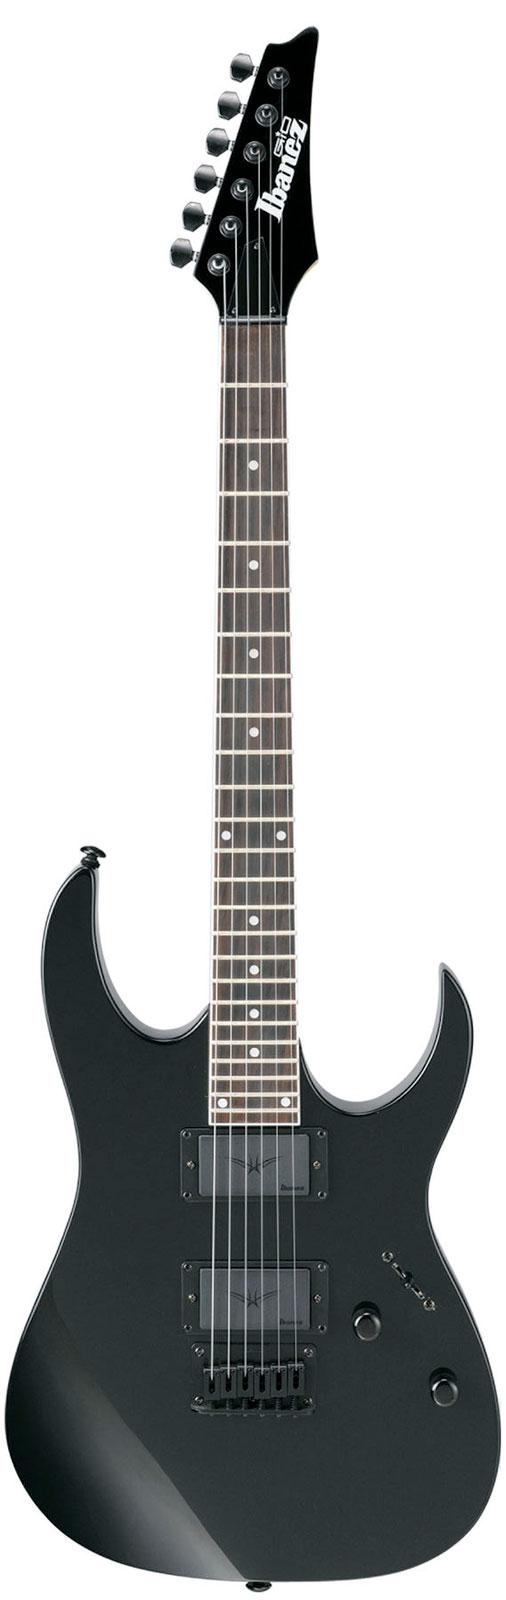 Ibañez - Guitarra Eléctrica RG, Color: Negra Mod.GRG121EX-BKN_13